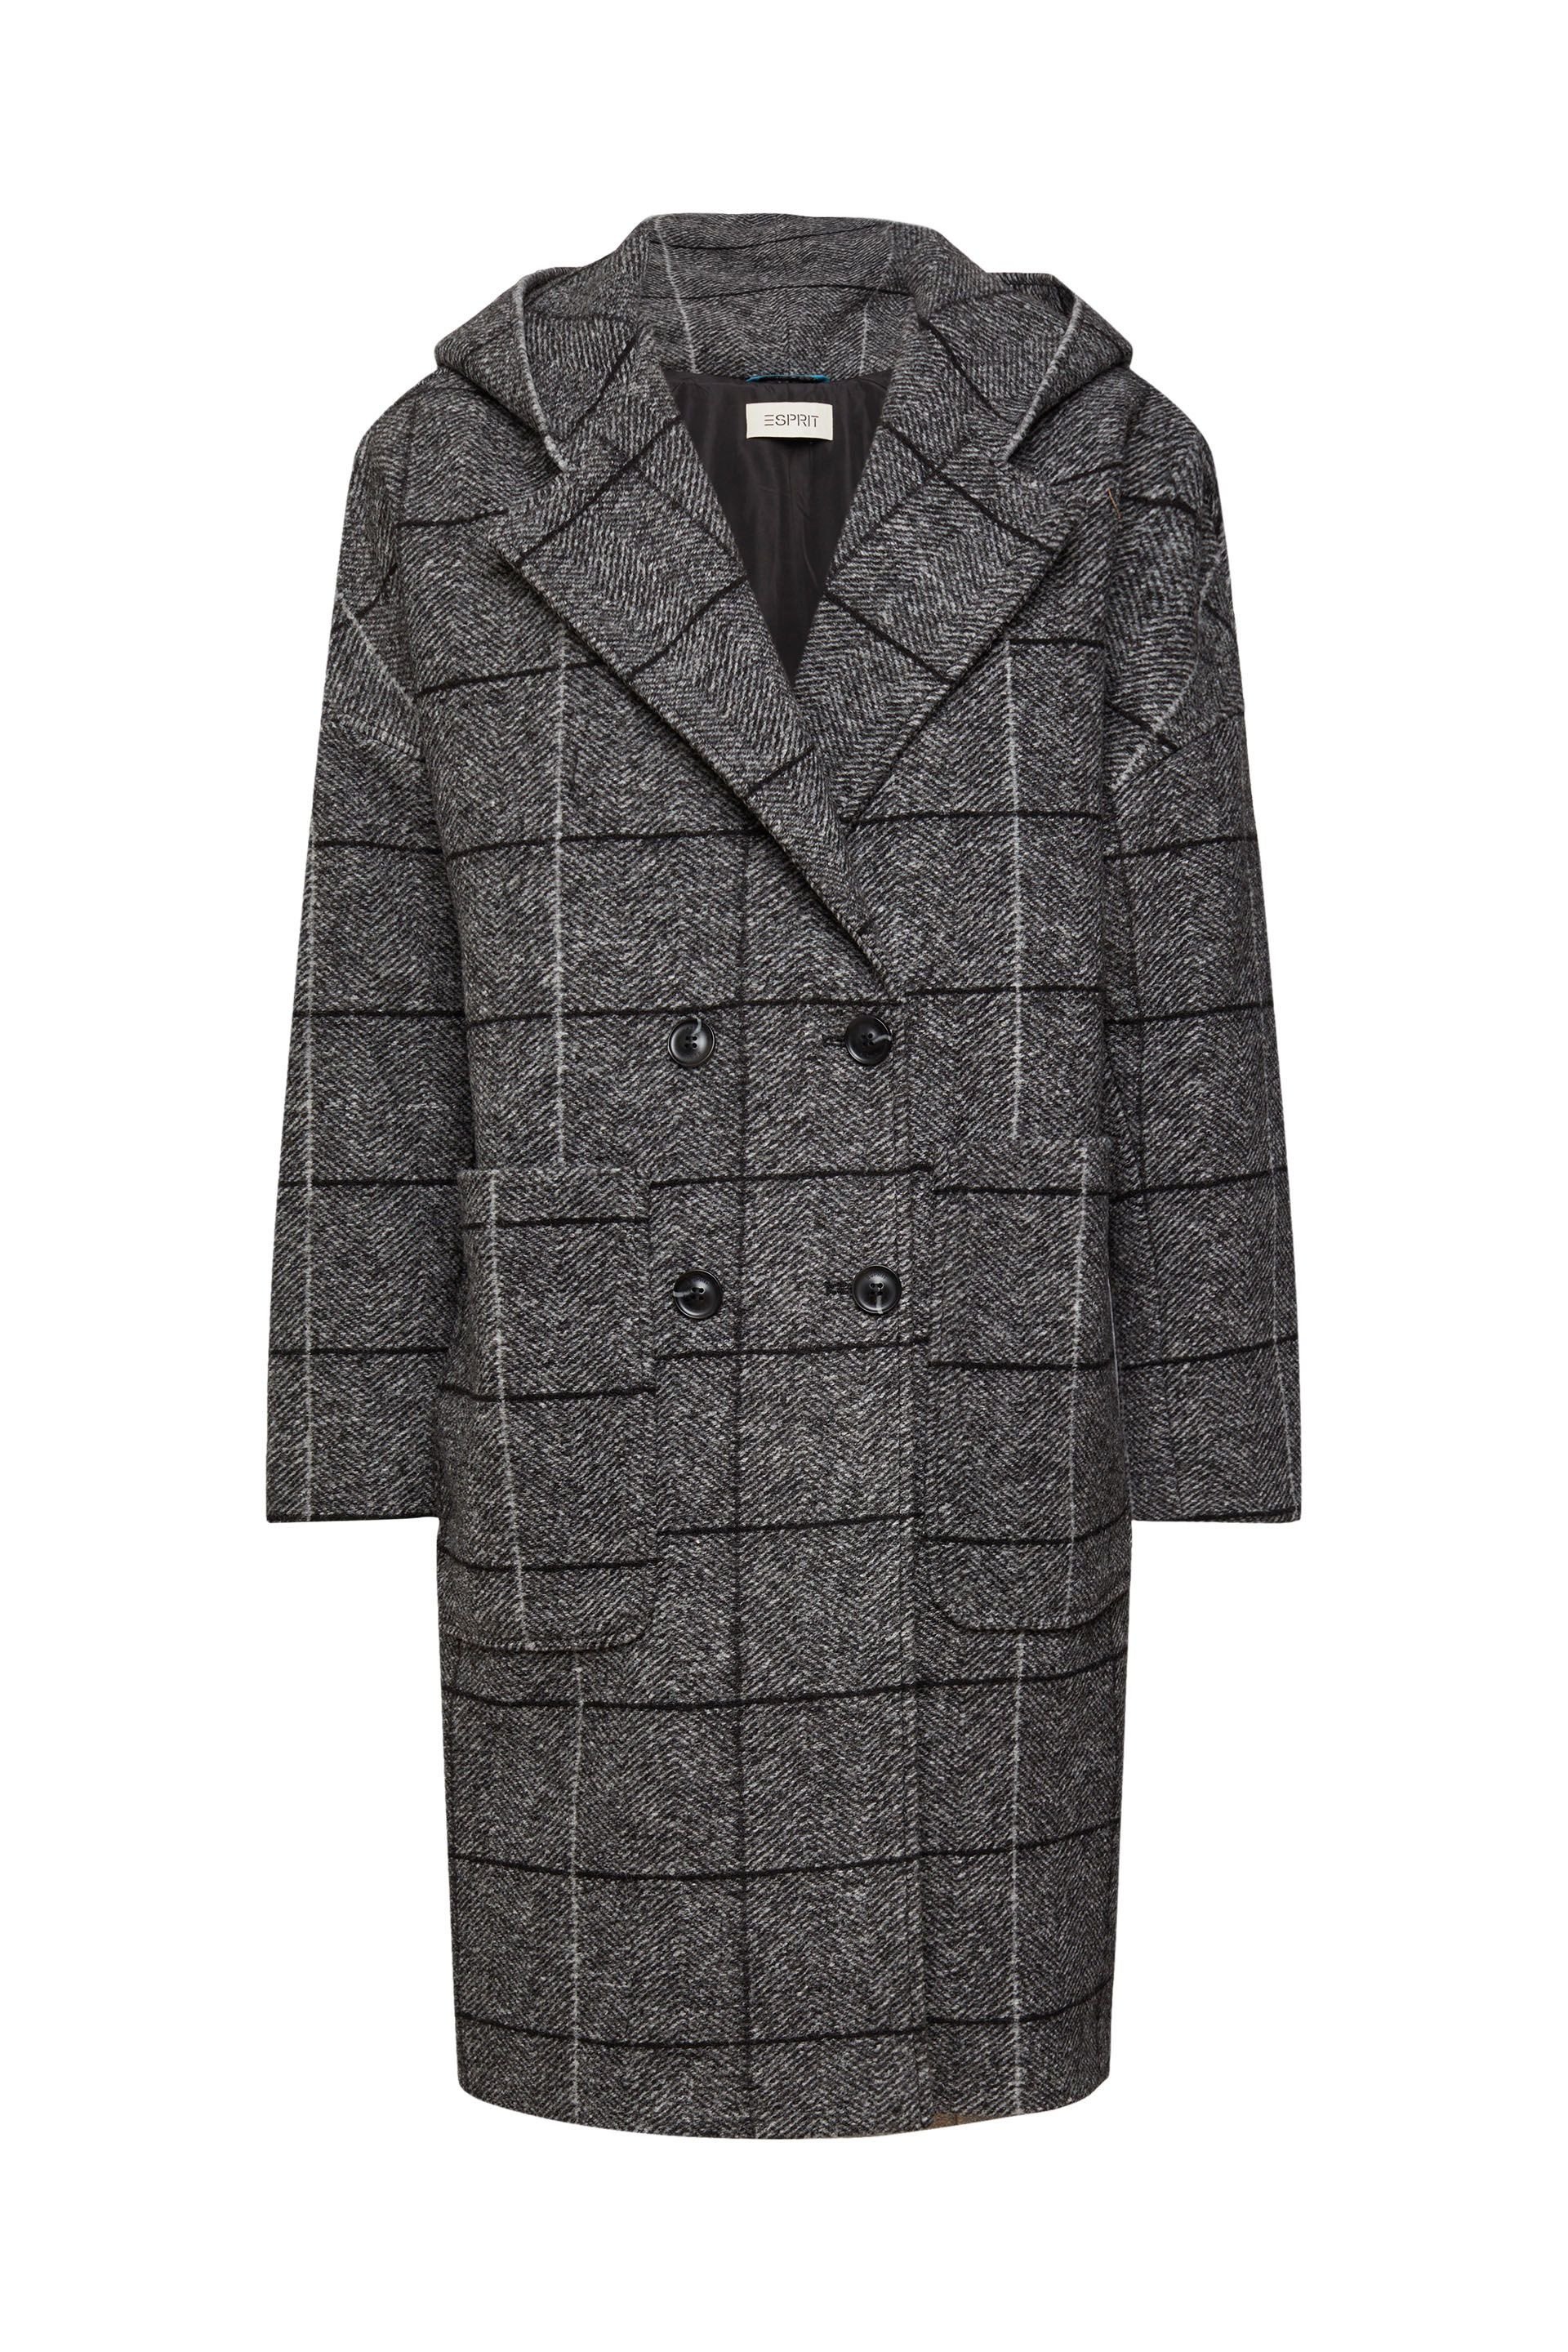 Hooded coat, Dark Grey, large image number 0